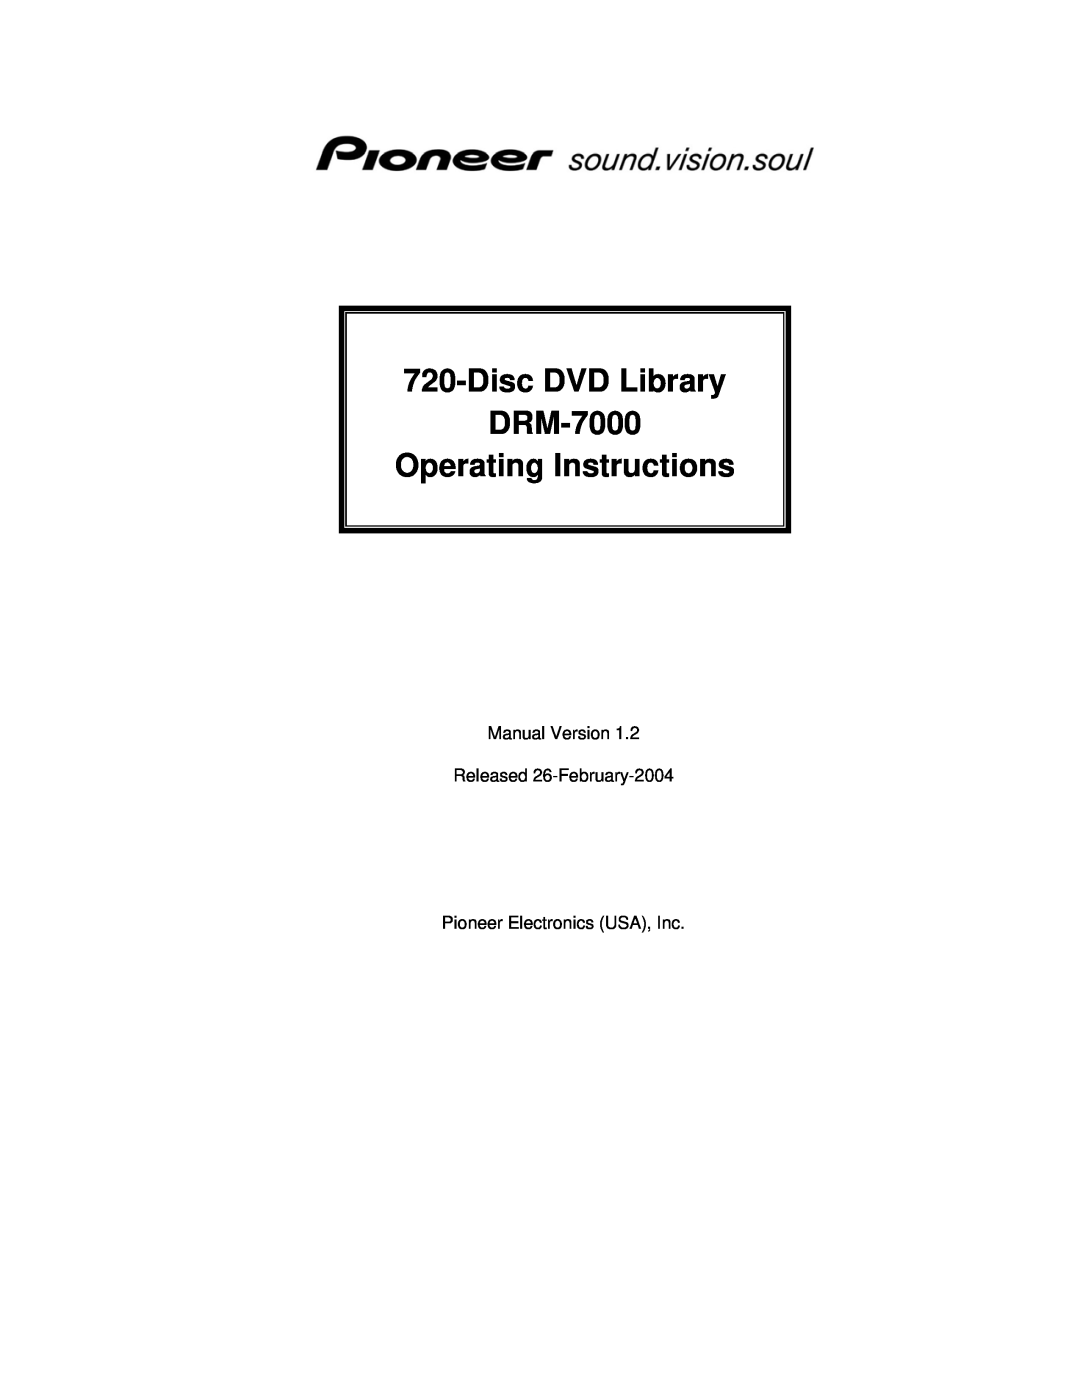 Pioneer DRM-7000 manual DRM-3000 